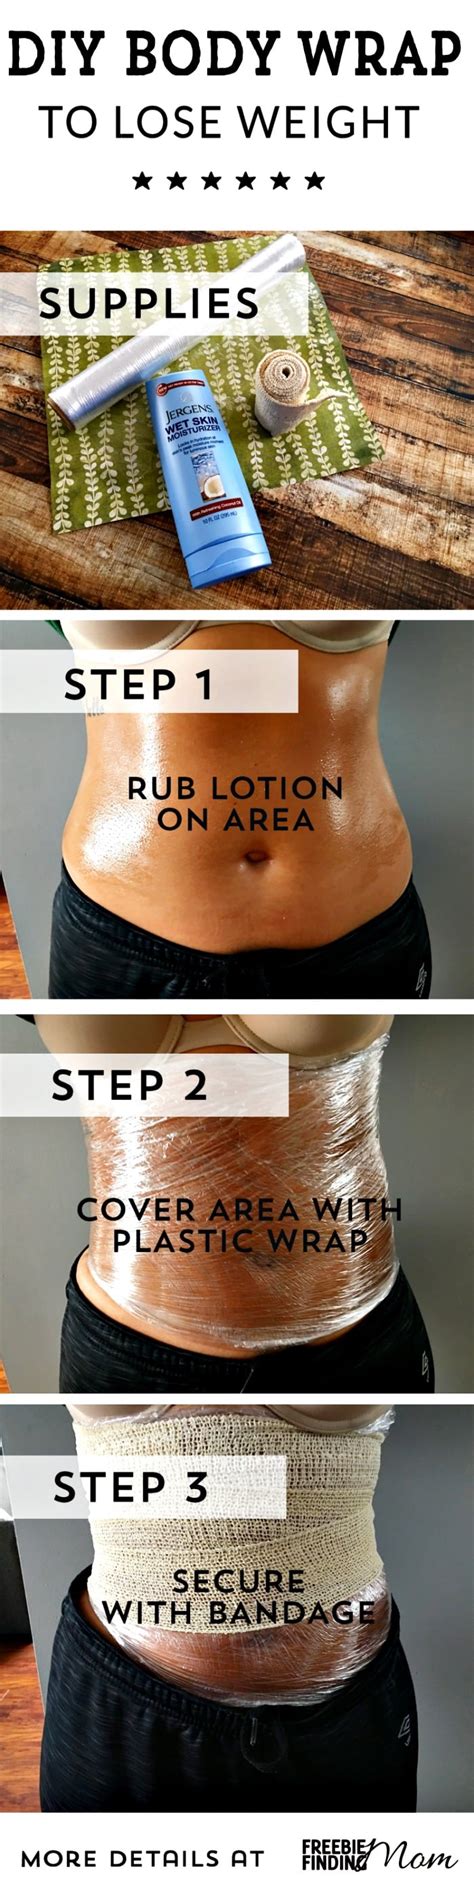 homemade skin firming body wrap recipe bryont blog